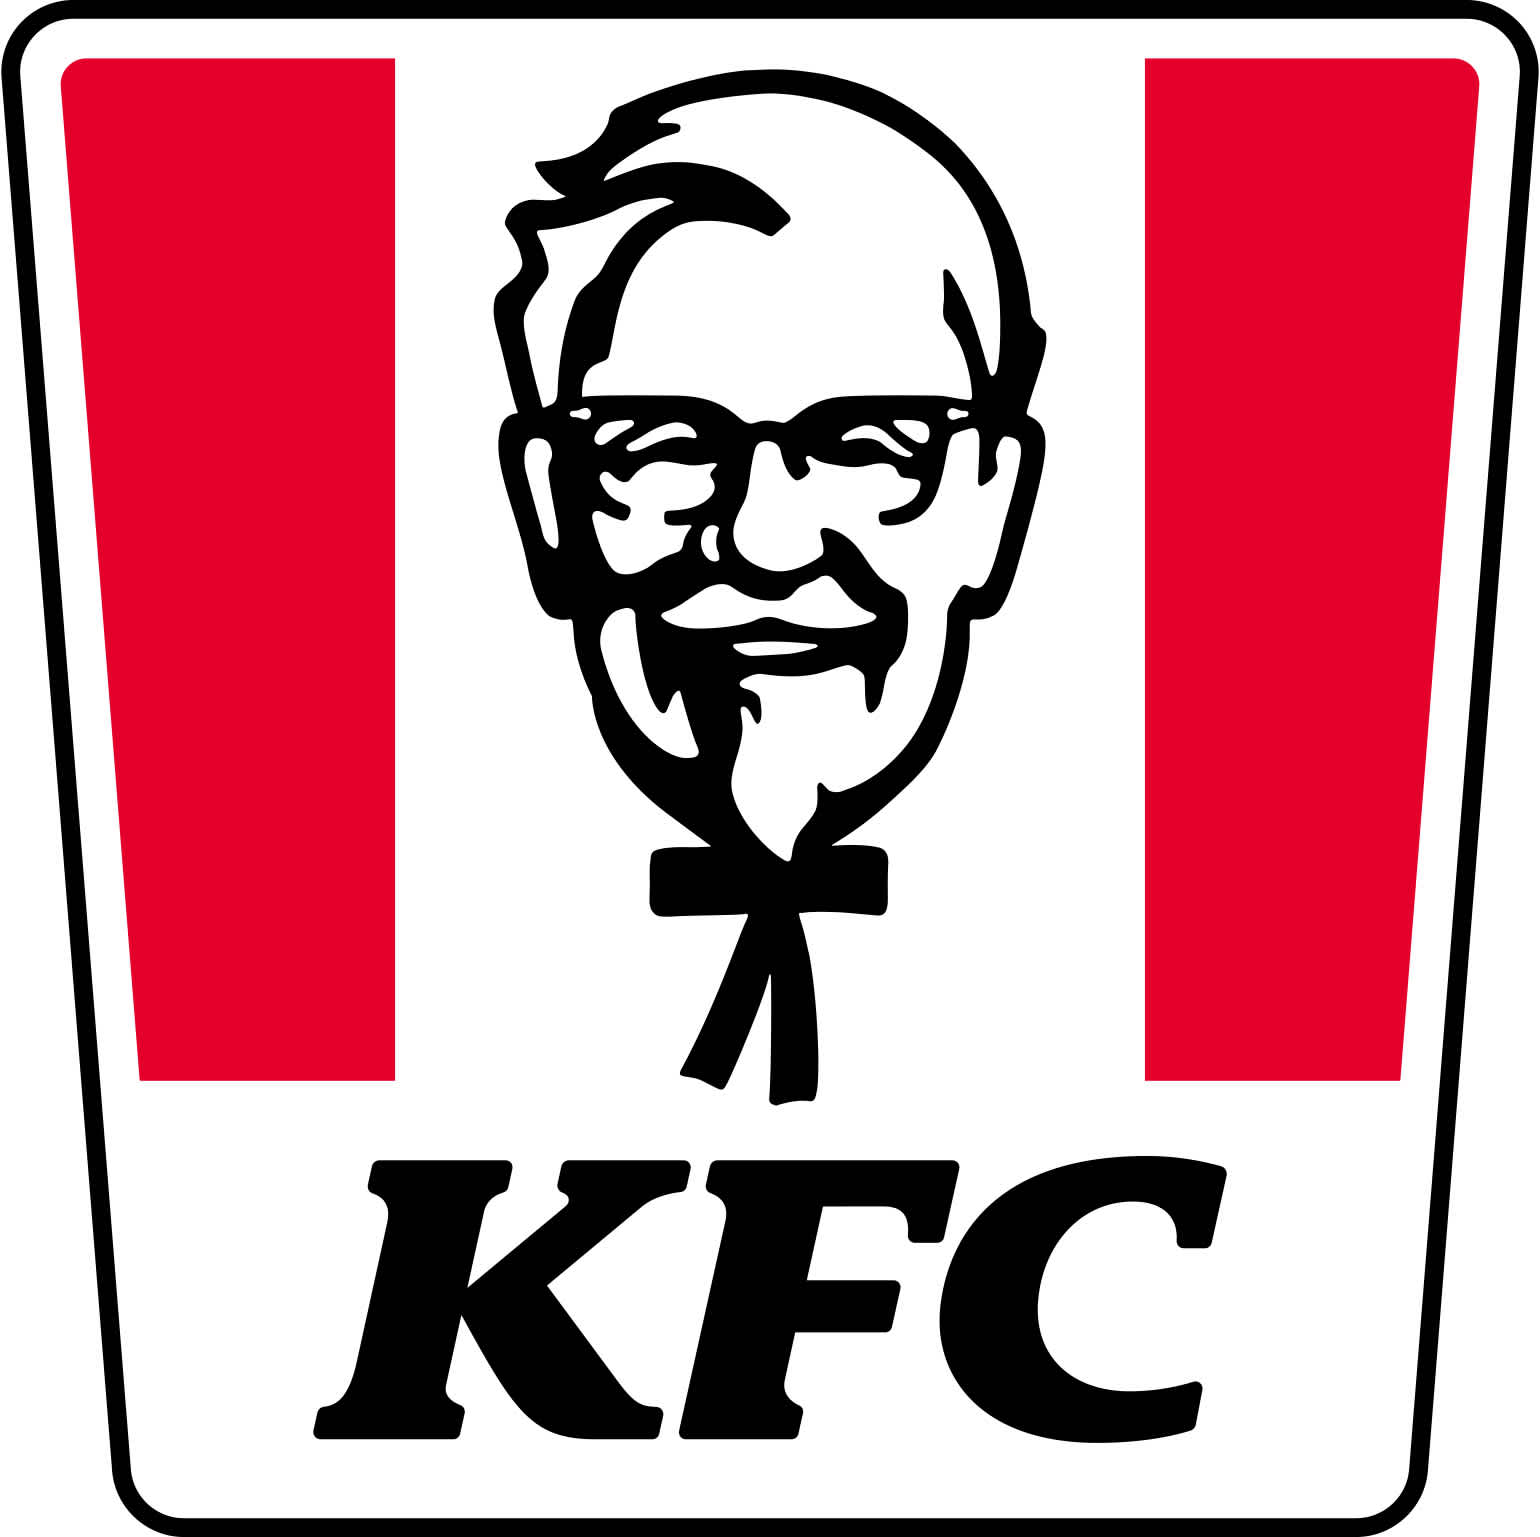 A BUCKET FULL OF KFC DEALS